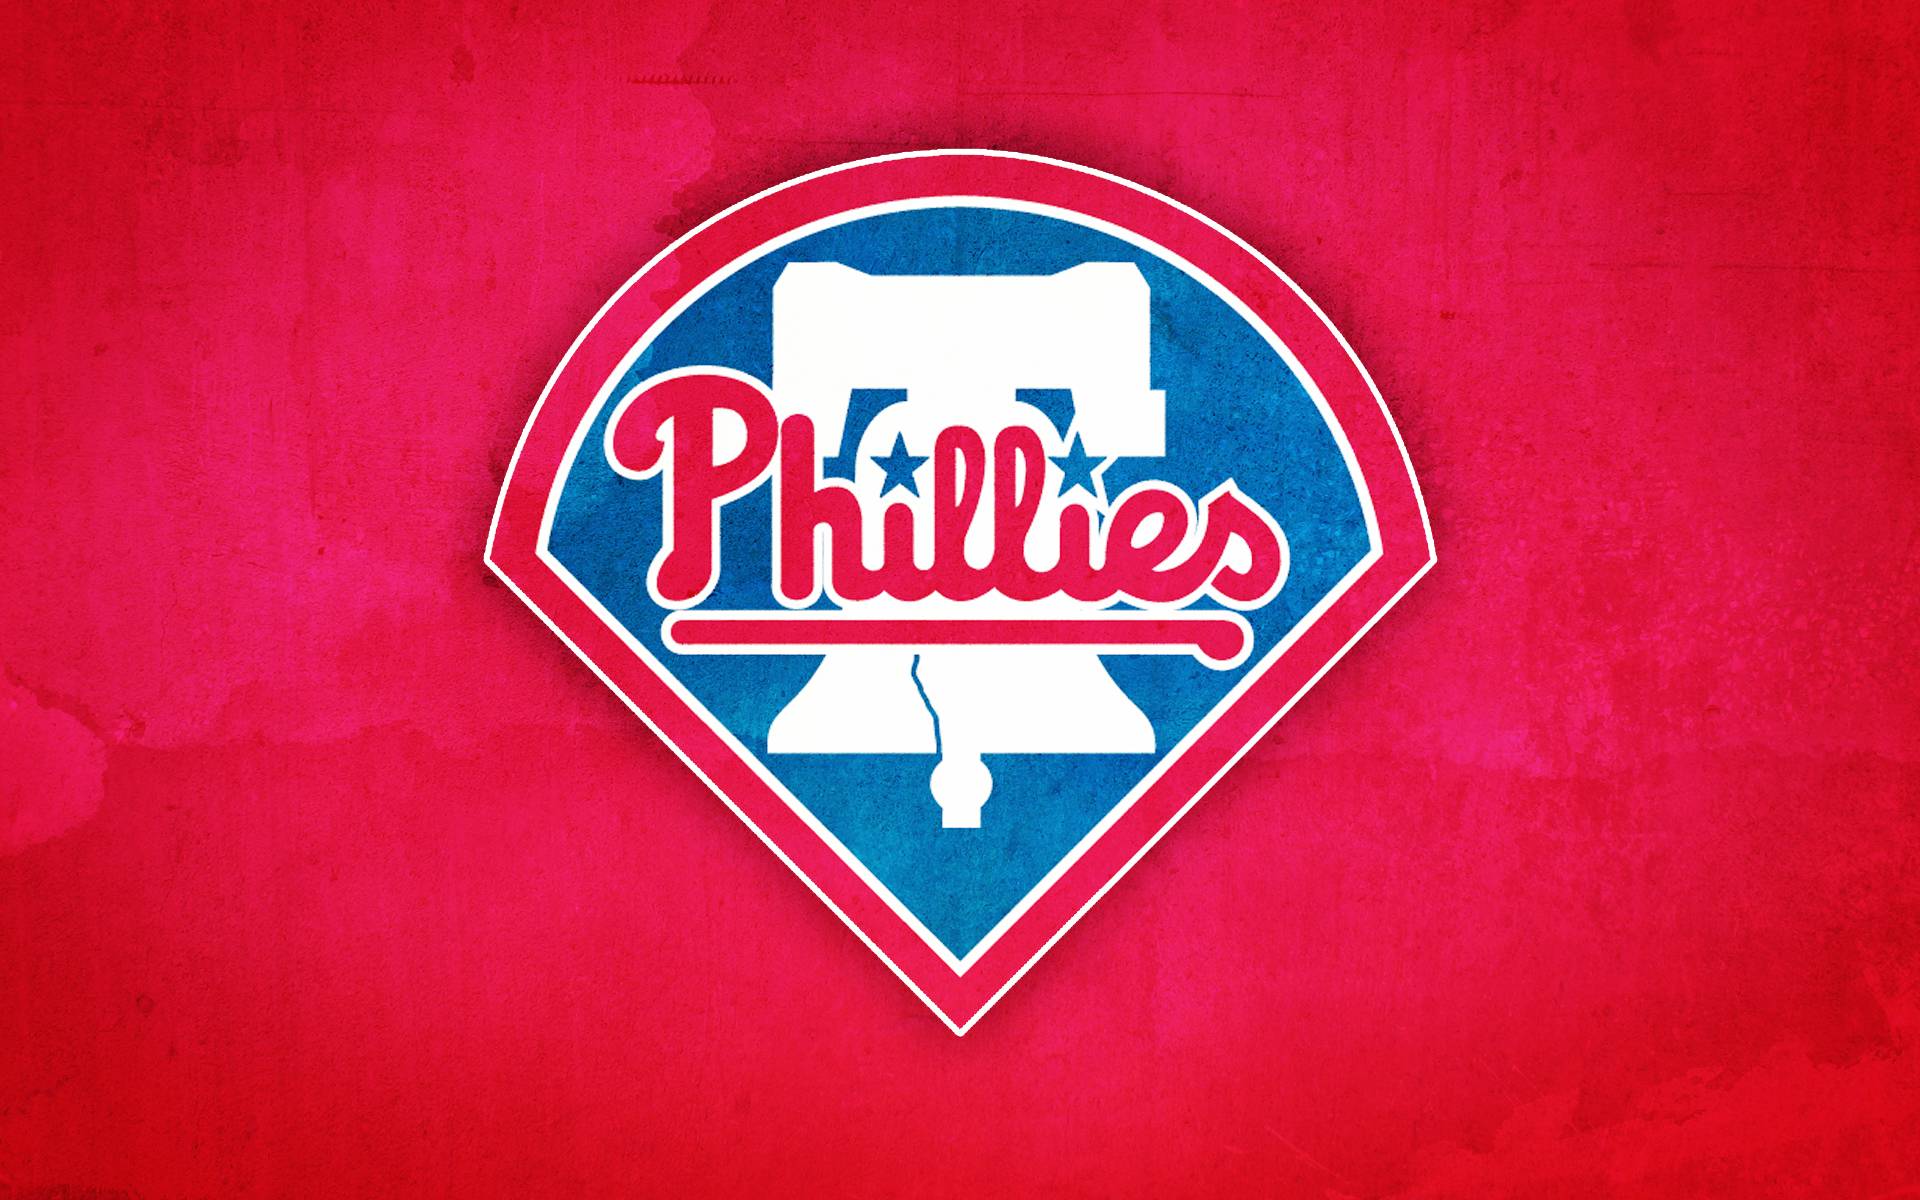 Philadelphia Phillies wallpaper. Philadelphia Phillies